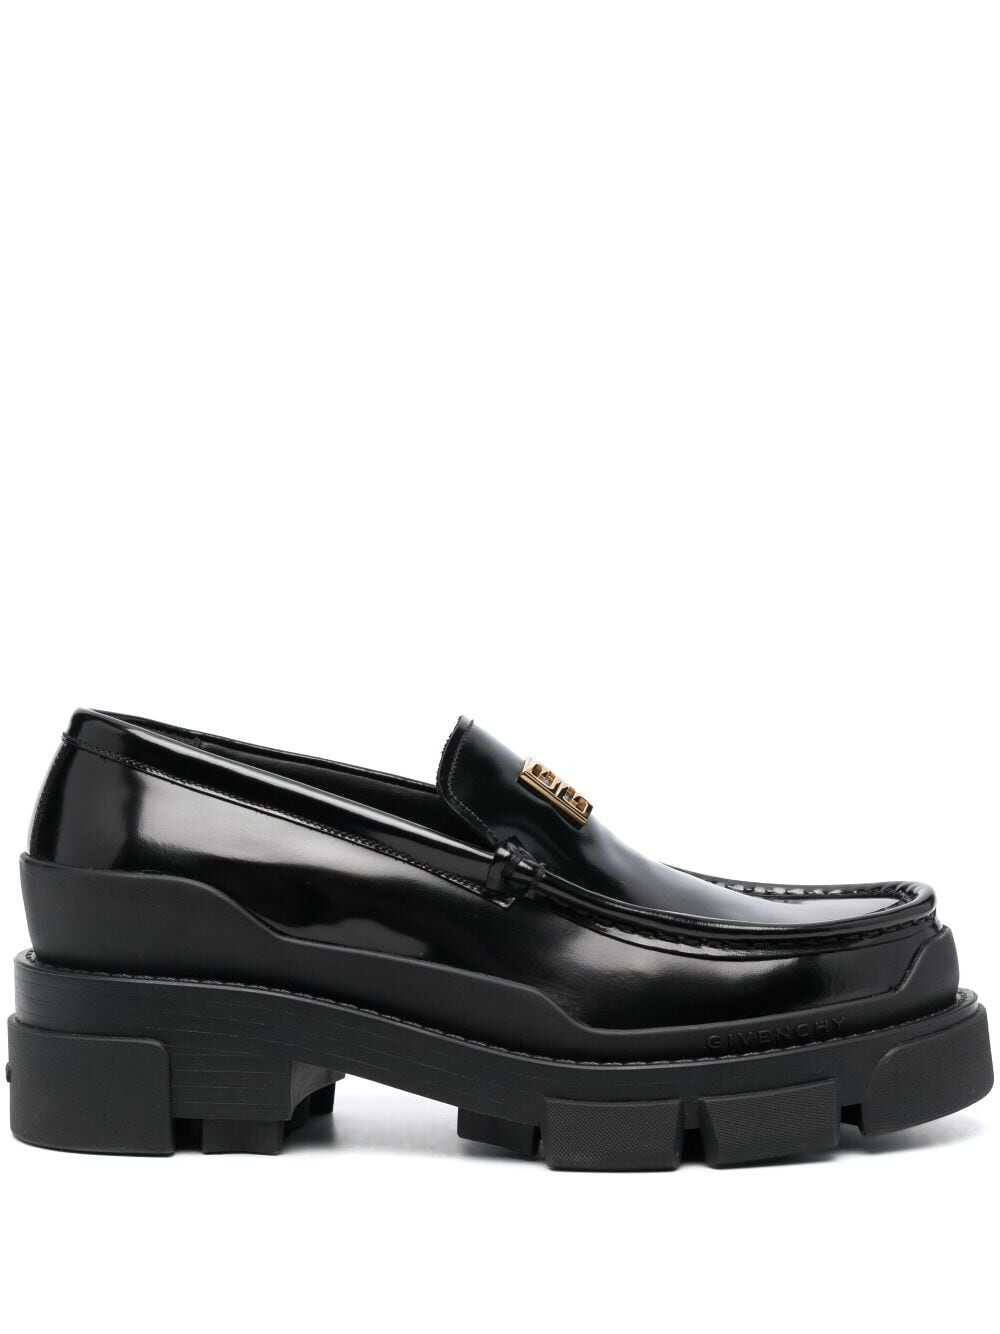 Givenchy Flat Shoes Black Black image3